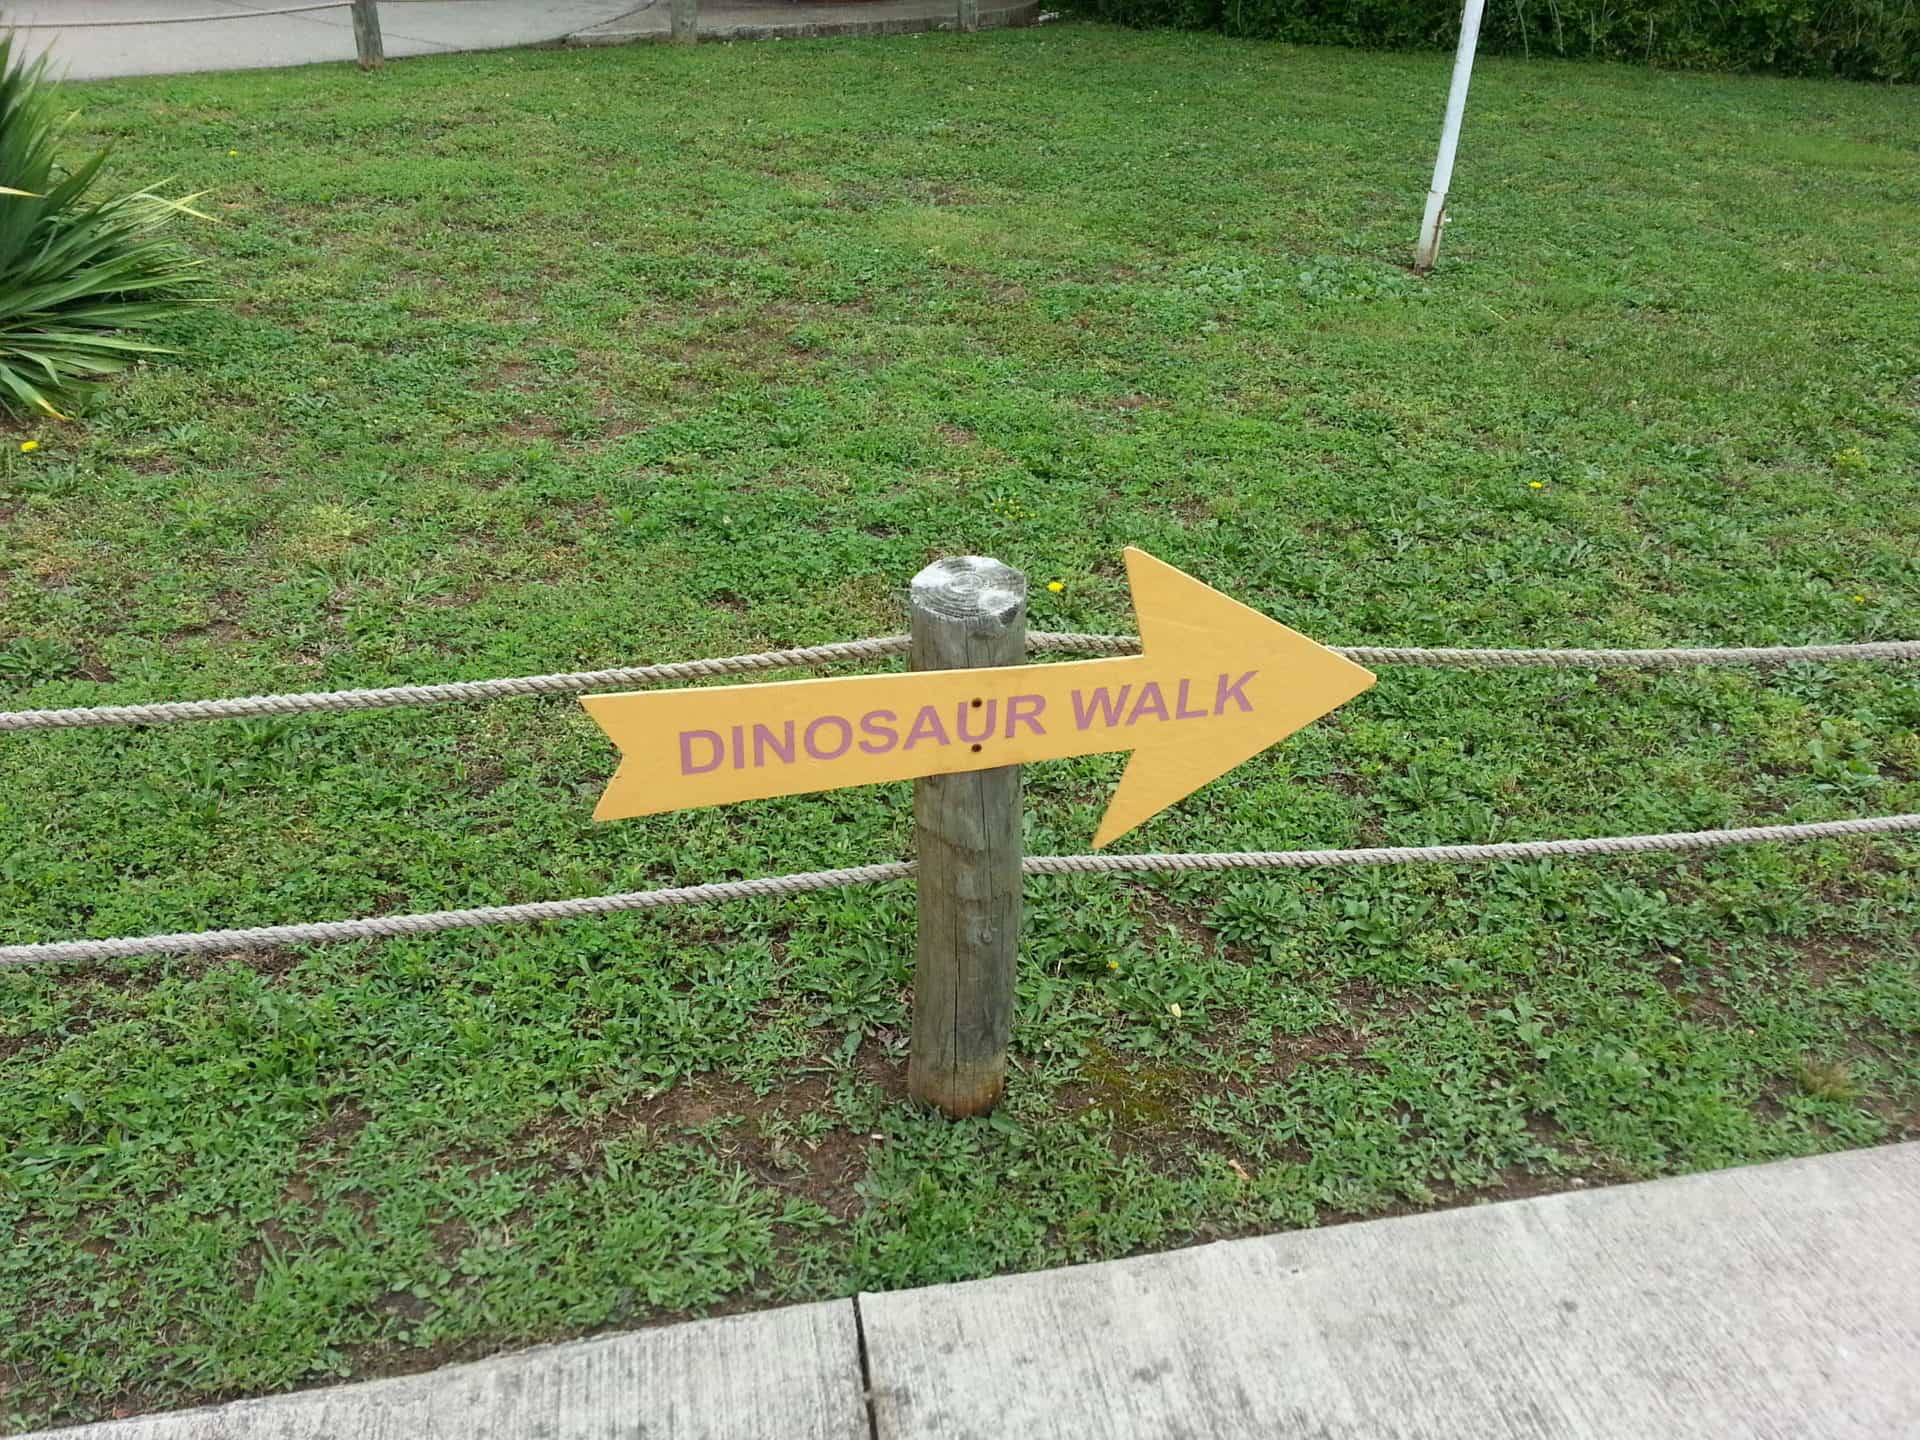 Dinosaur World dinosaur walk sign